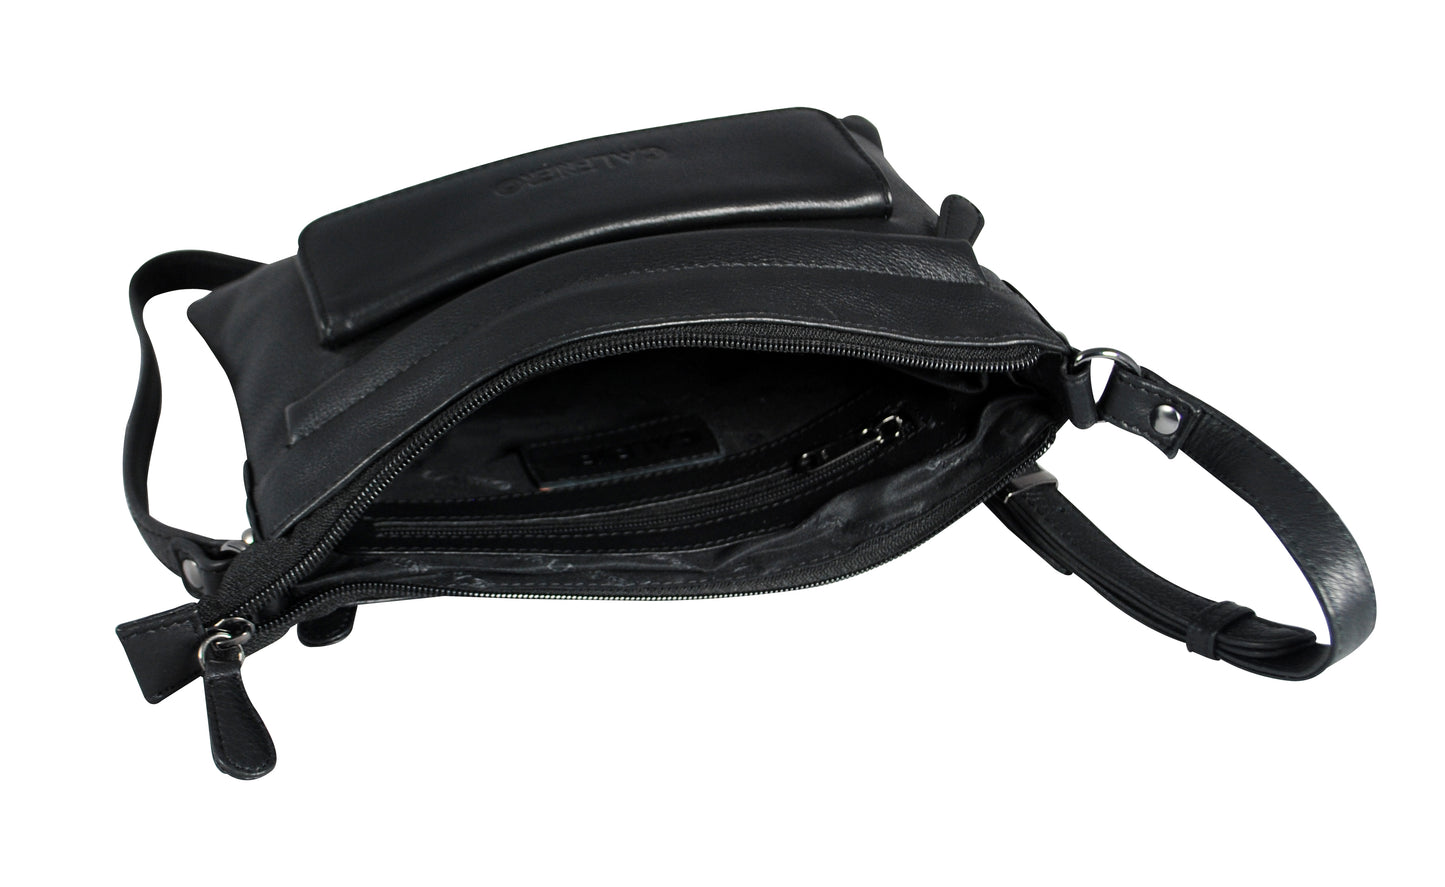 Calfnero Genuine Leather Women's Sling Bag (71437-Black)